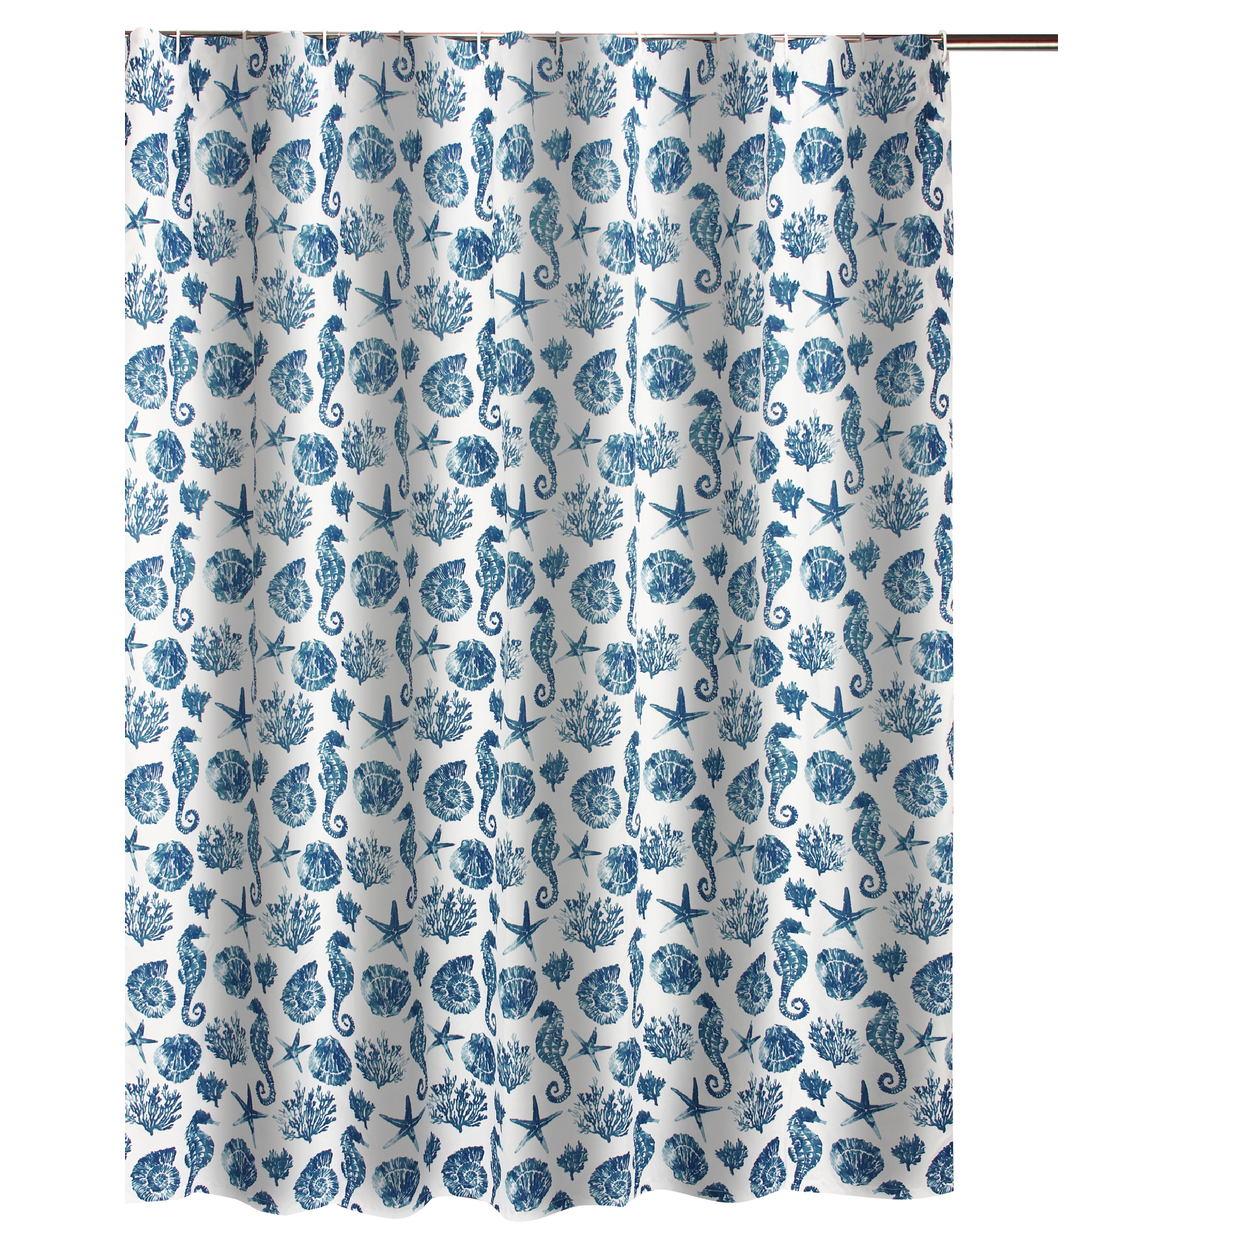 Riga 72 Inch Shower Curtain, Blue Seashells Print, Button Holes, Microfiber